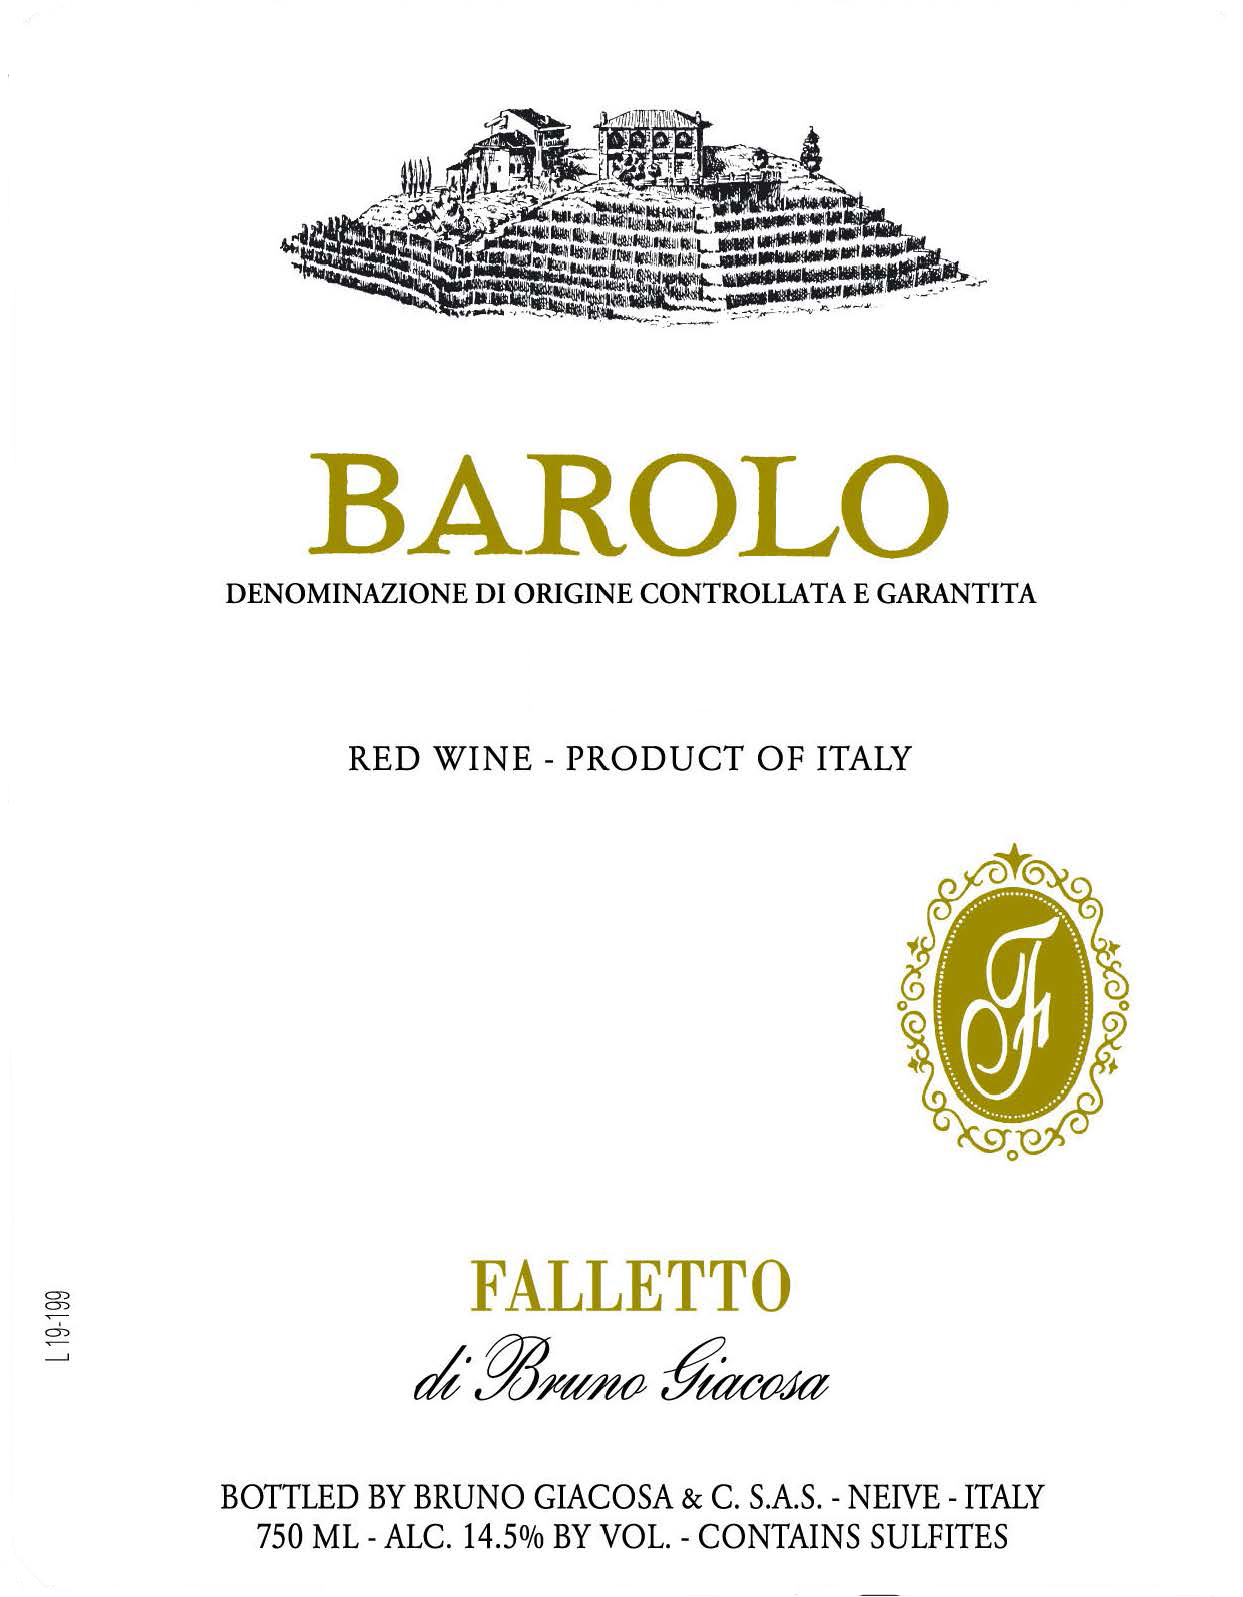 Bruno Giacosa - Barolo DOCG label